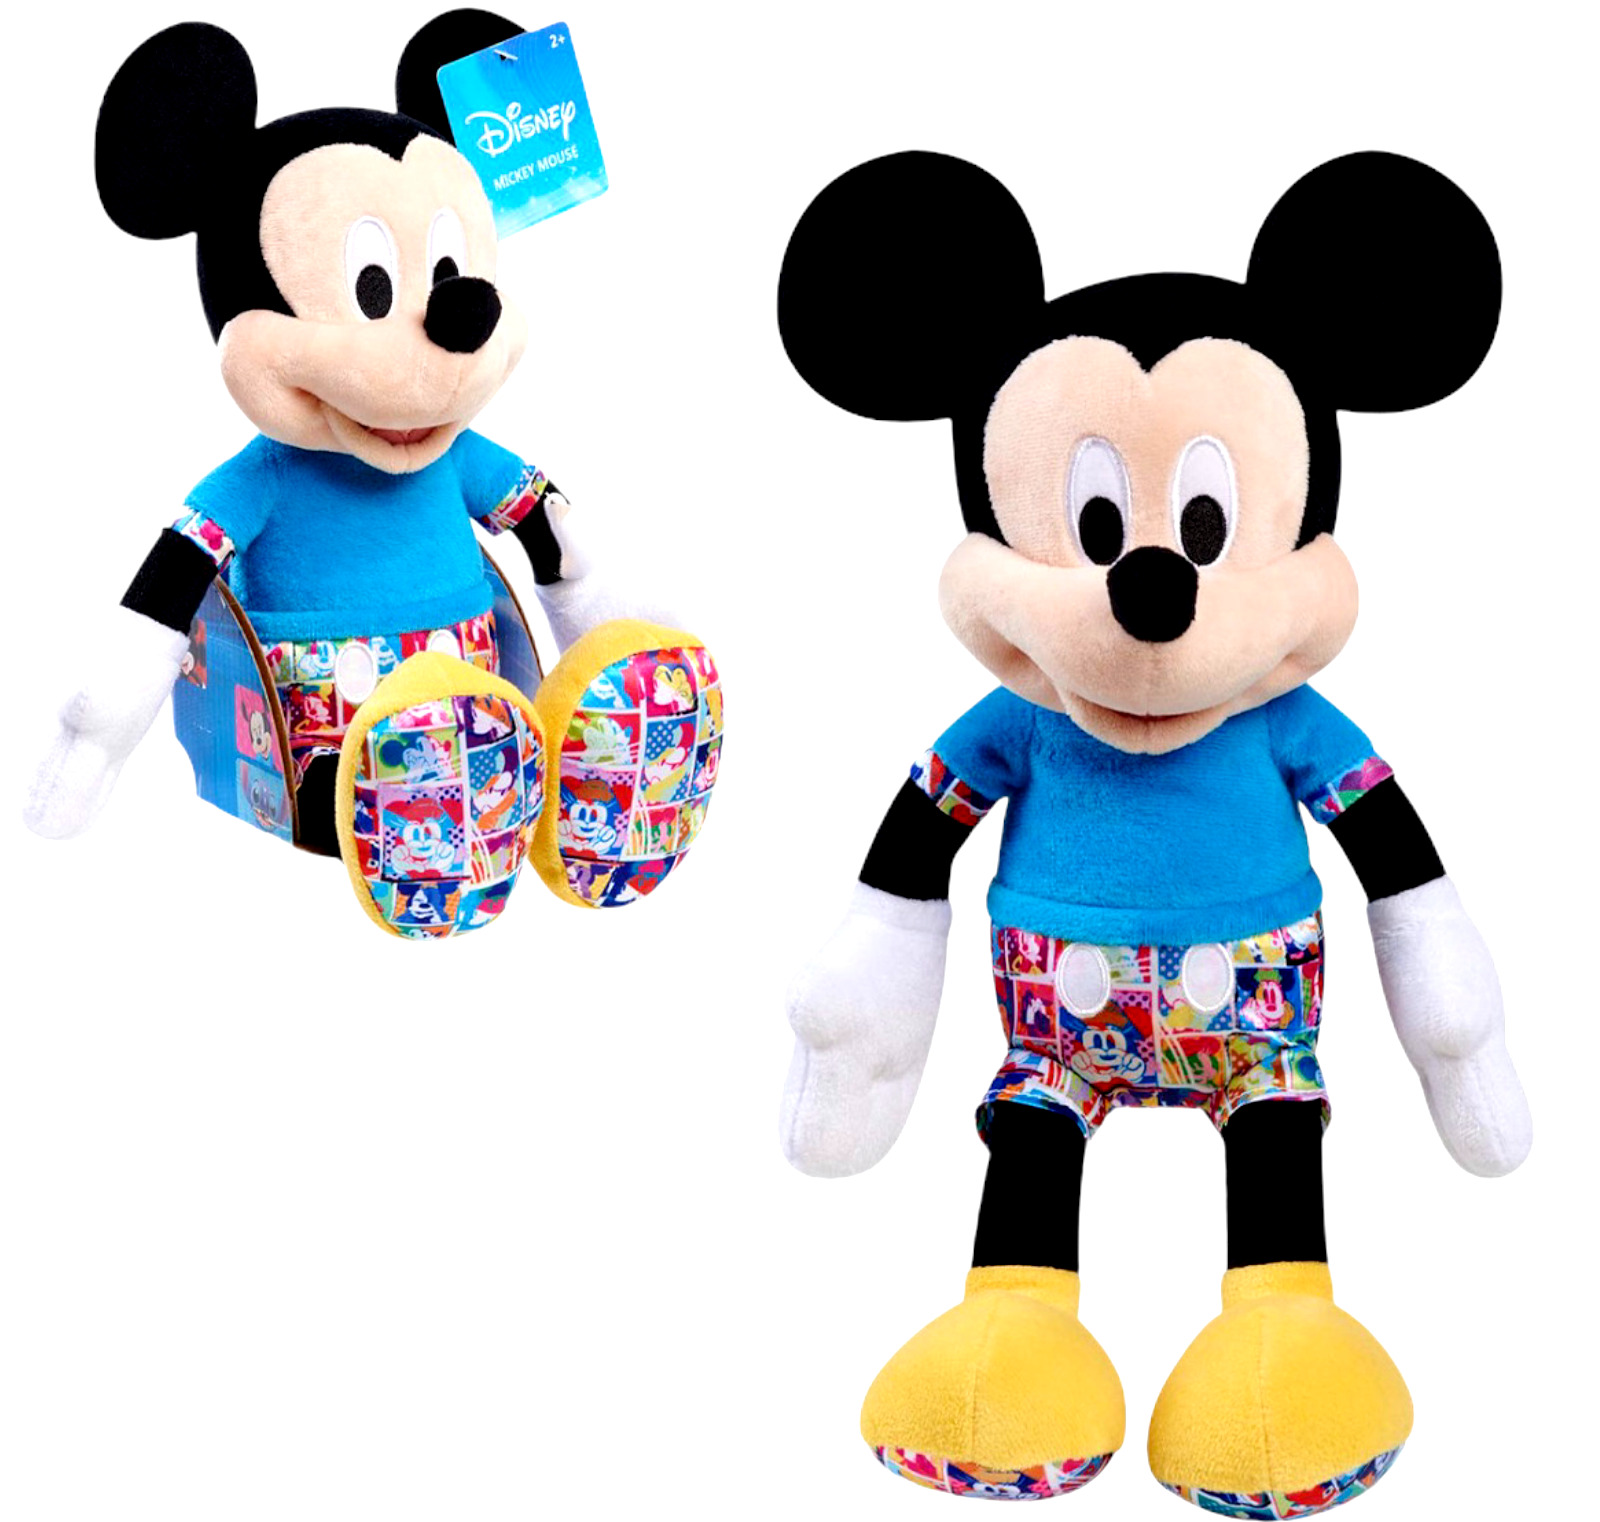 Disney Classics Mickey Mouse Made with super soft plush fabrics.